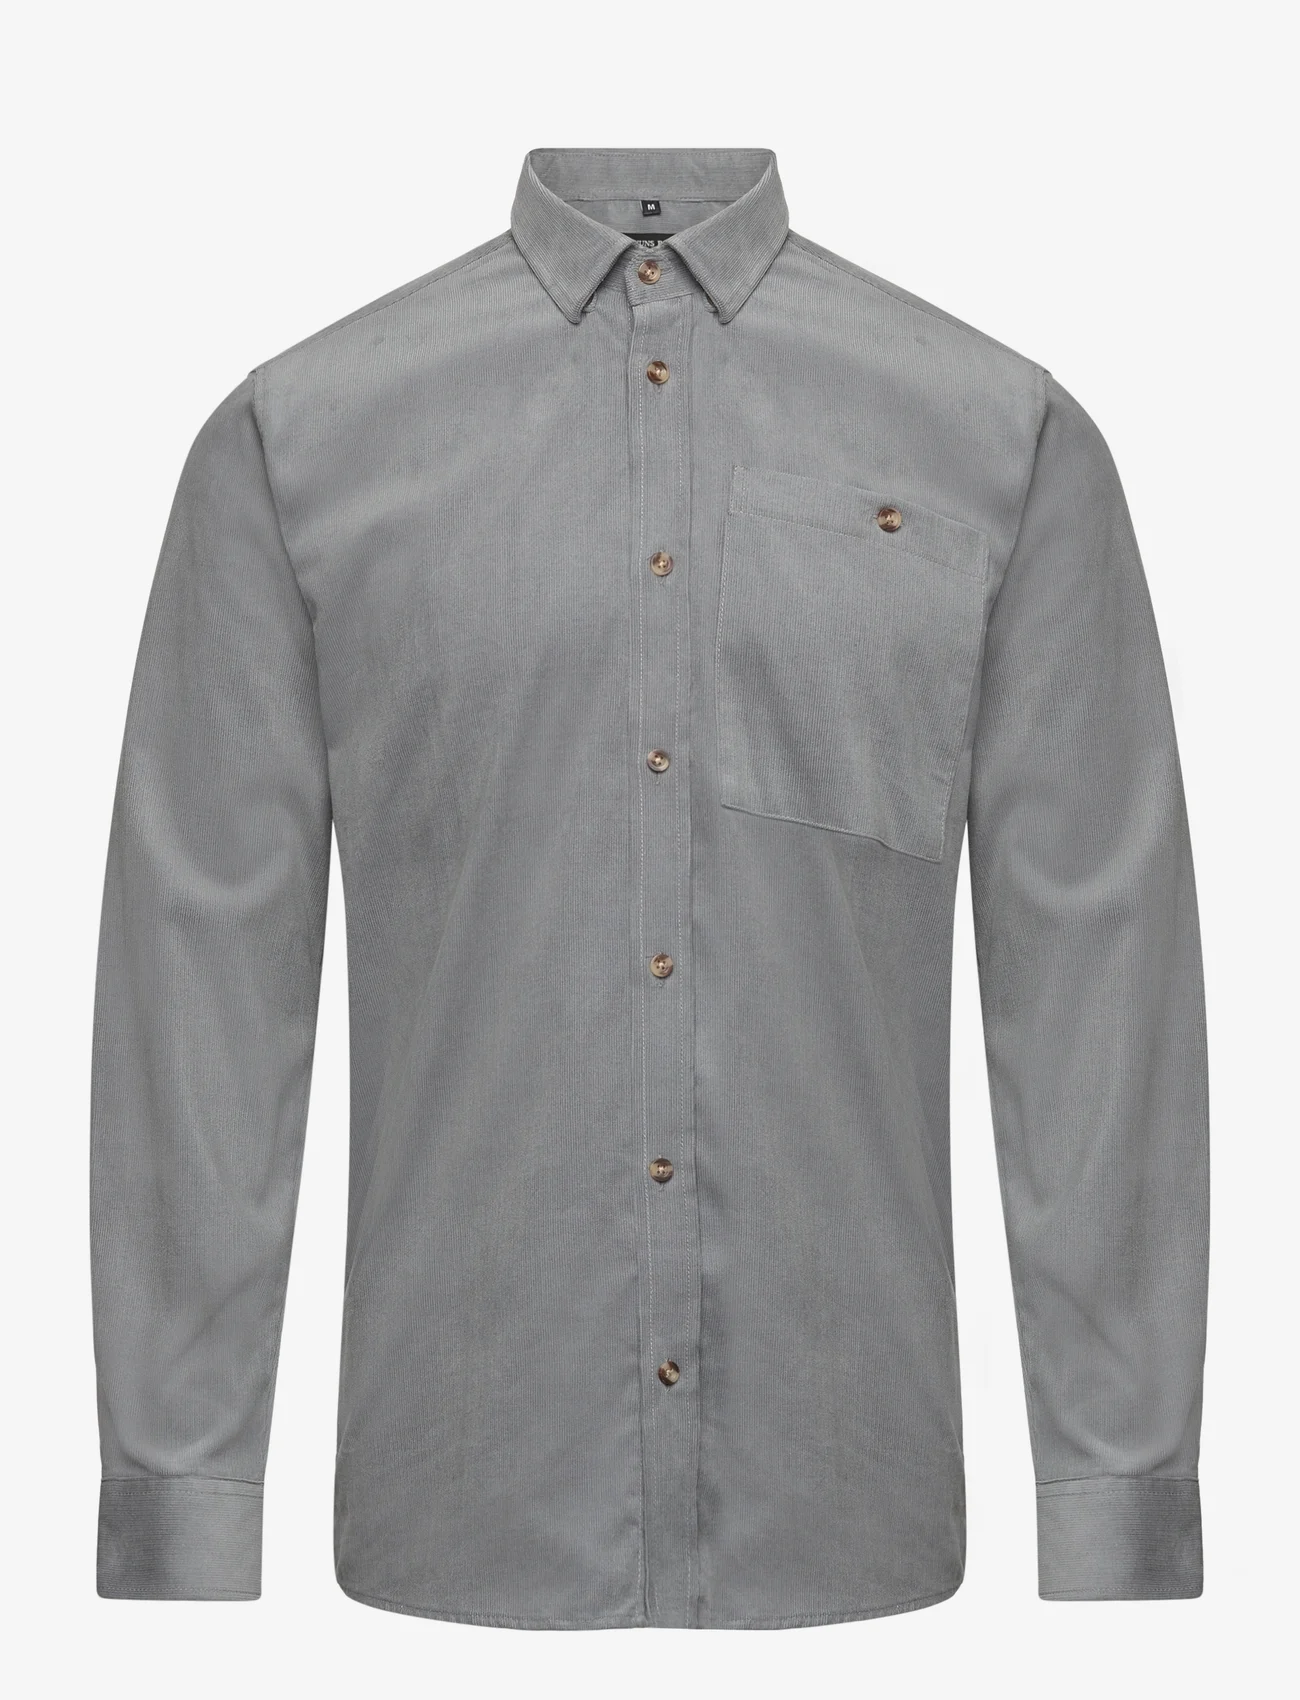 Bruuns Bazaar - CordBBStoke shirt - corduroy shirts - light grey - 0